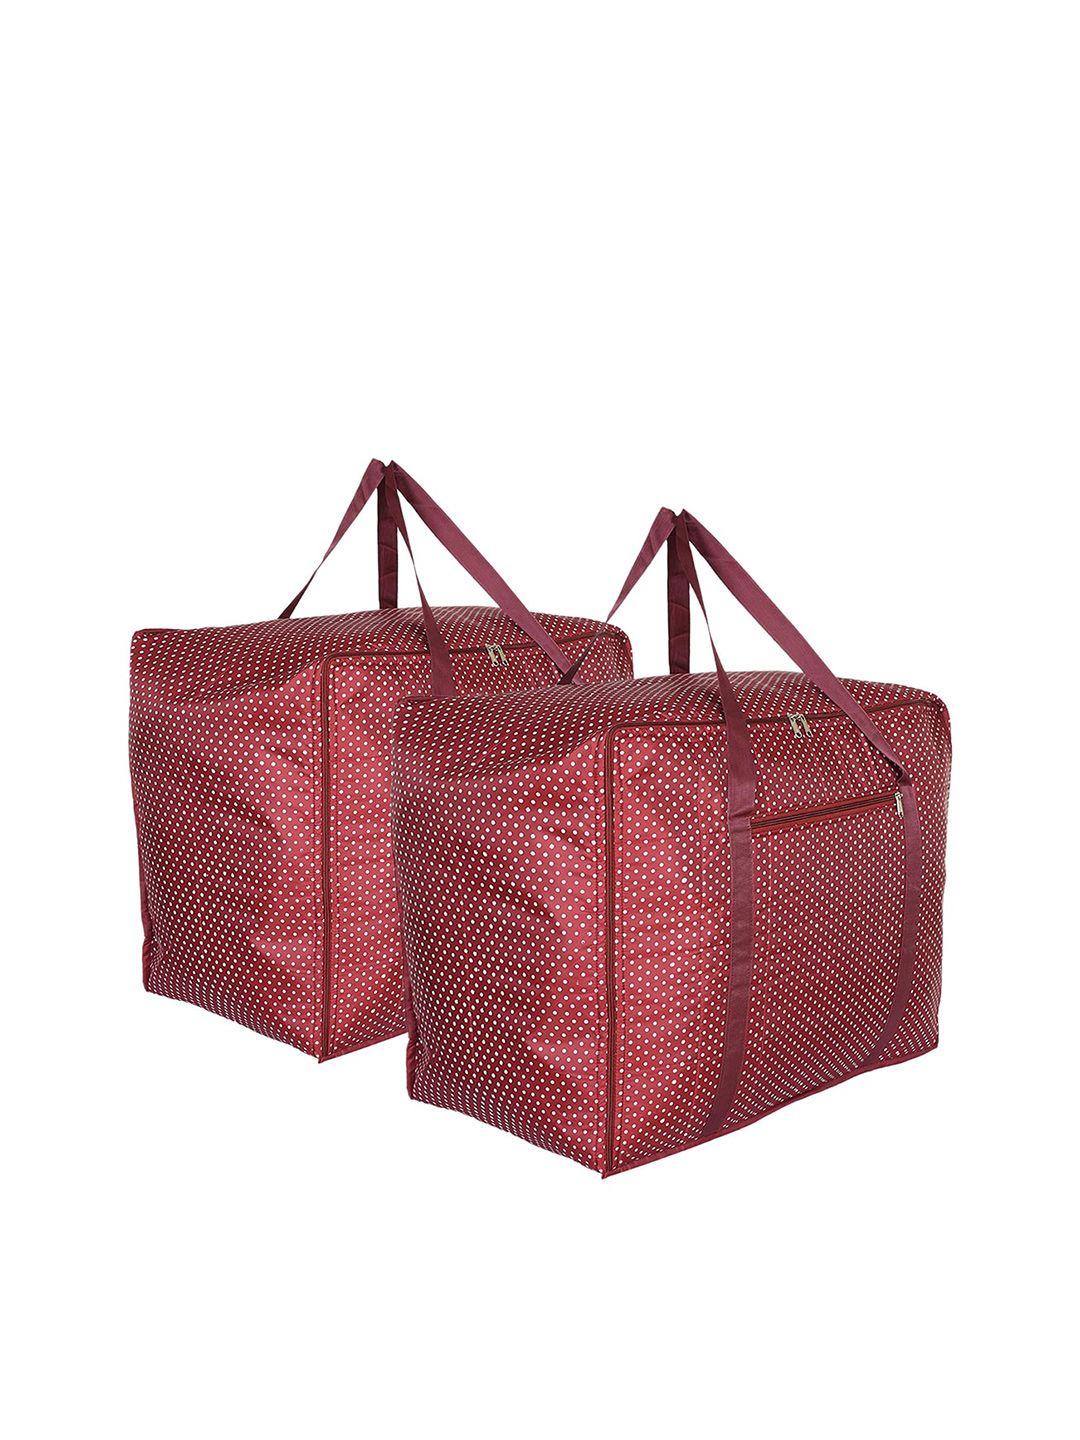 kuber industries pack of 2 printed foldable travel duffel bags